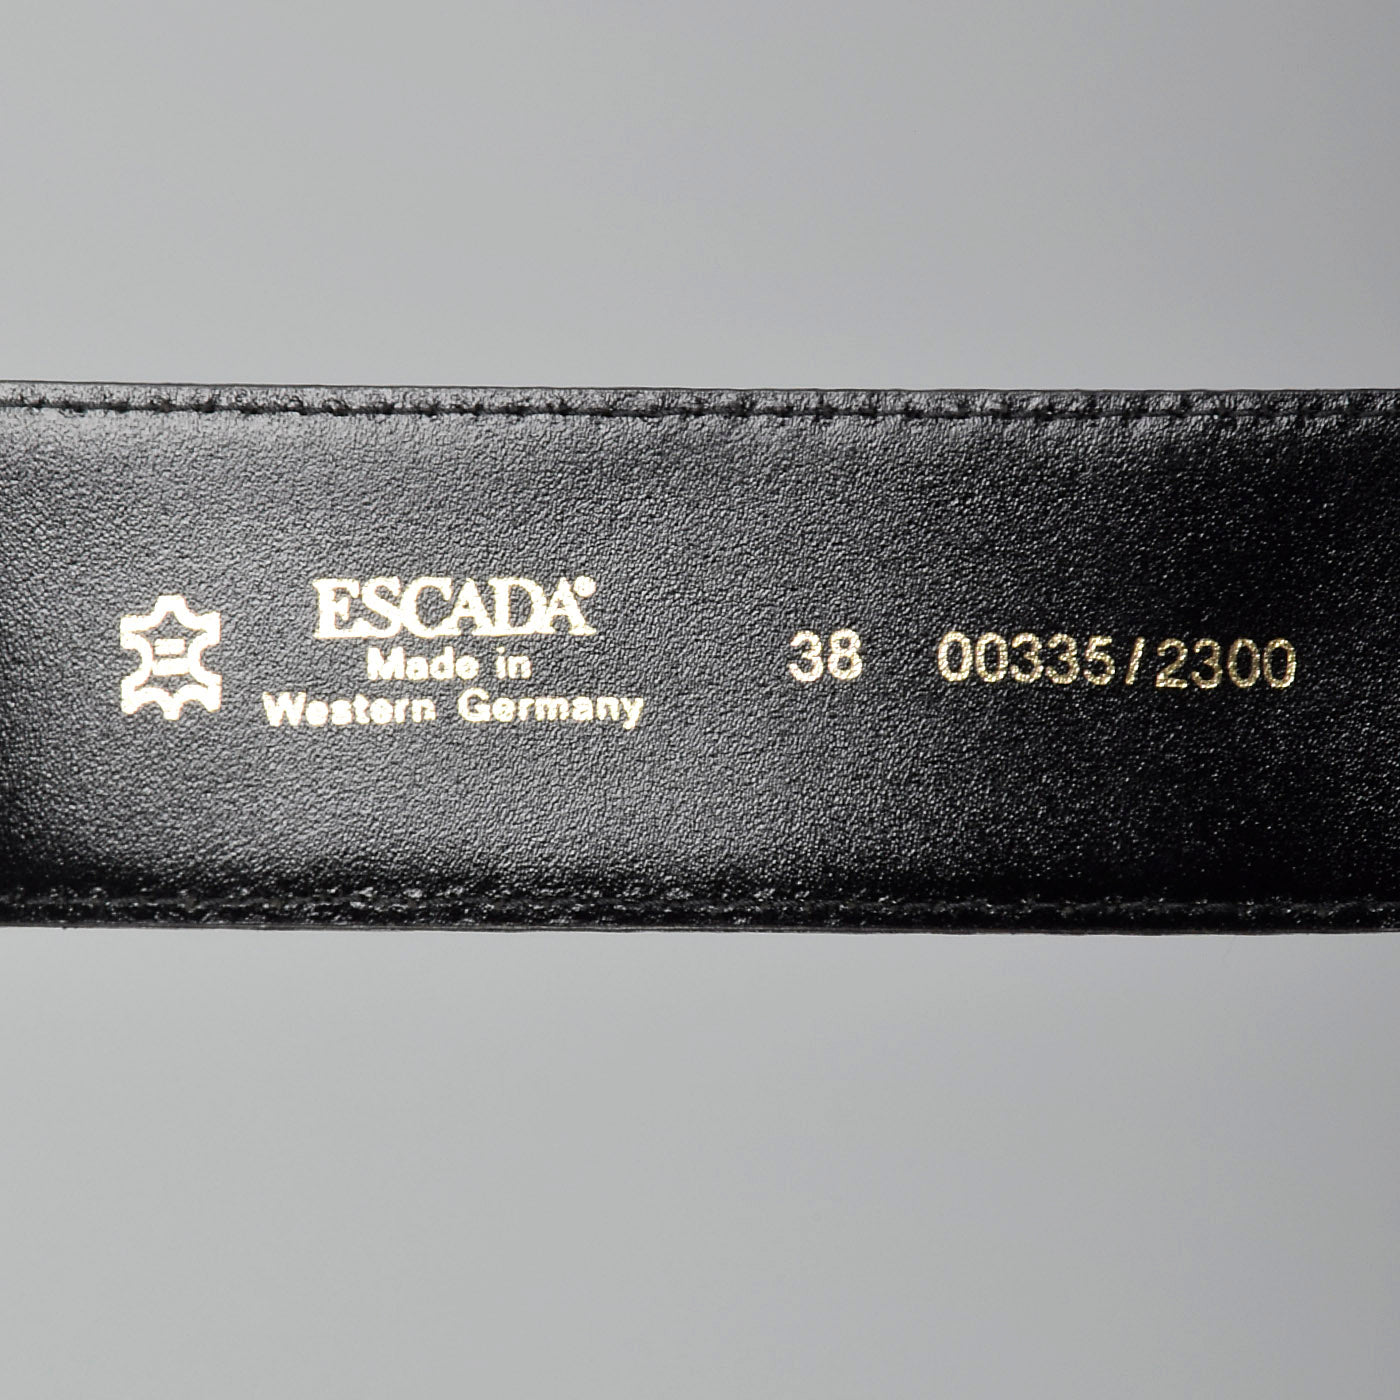 Escada Leather Belt with Slide Purse